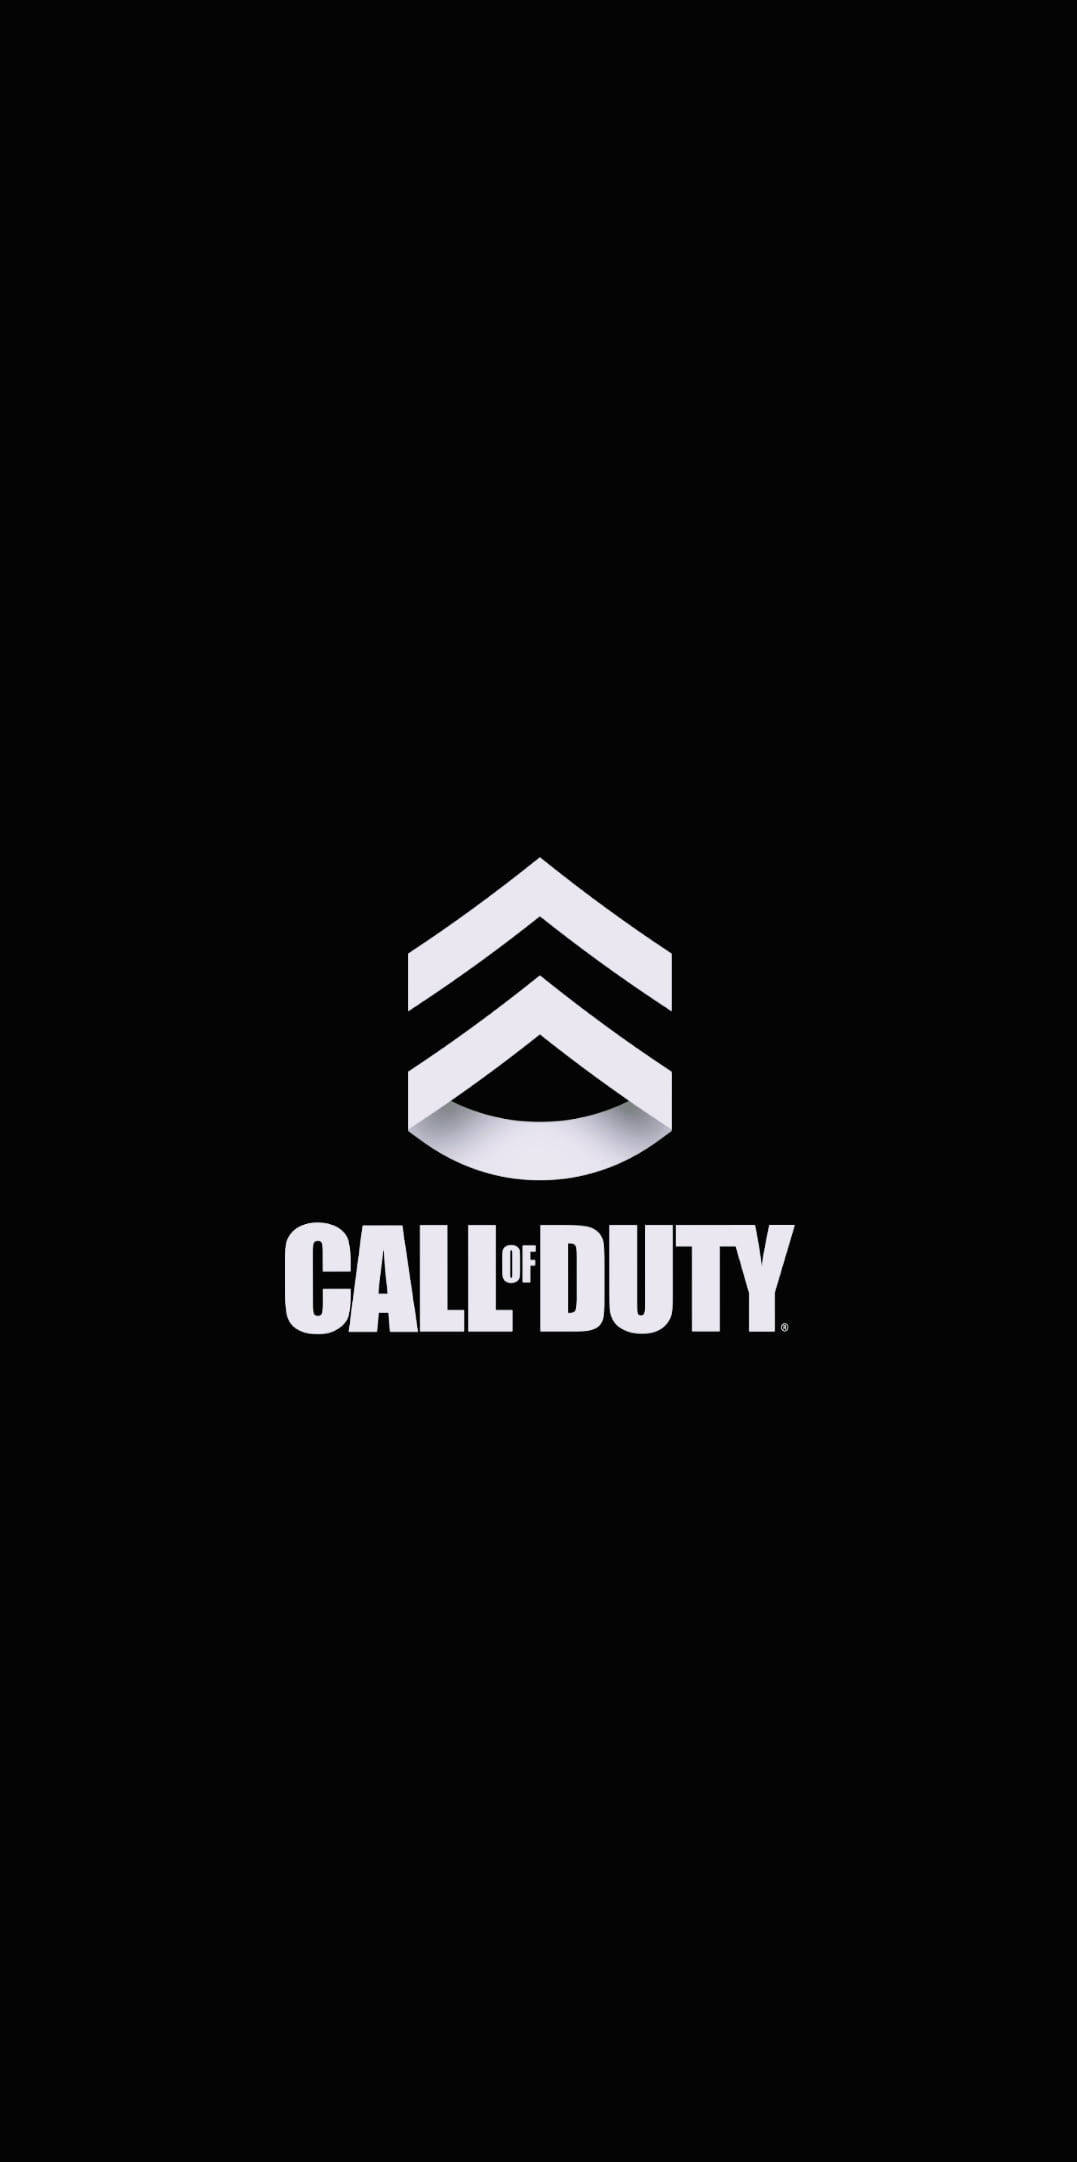 Download Call Of Duty Gaming Logo Wallpaper